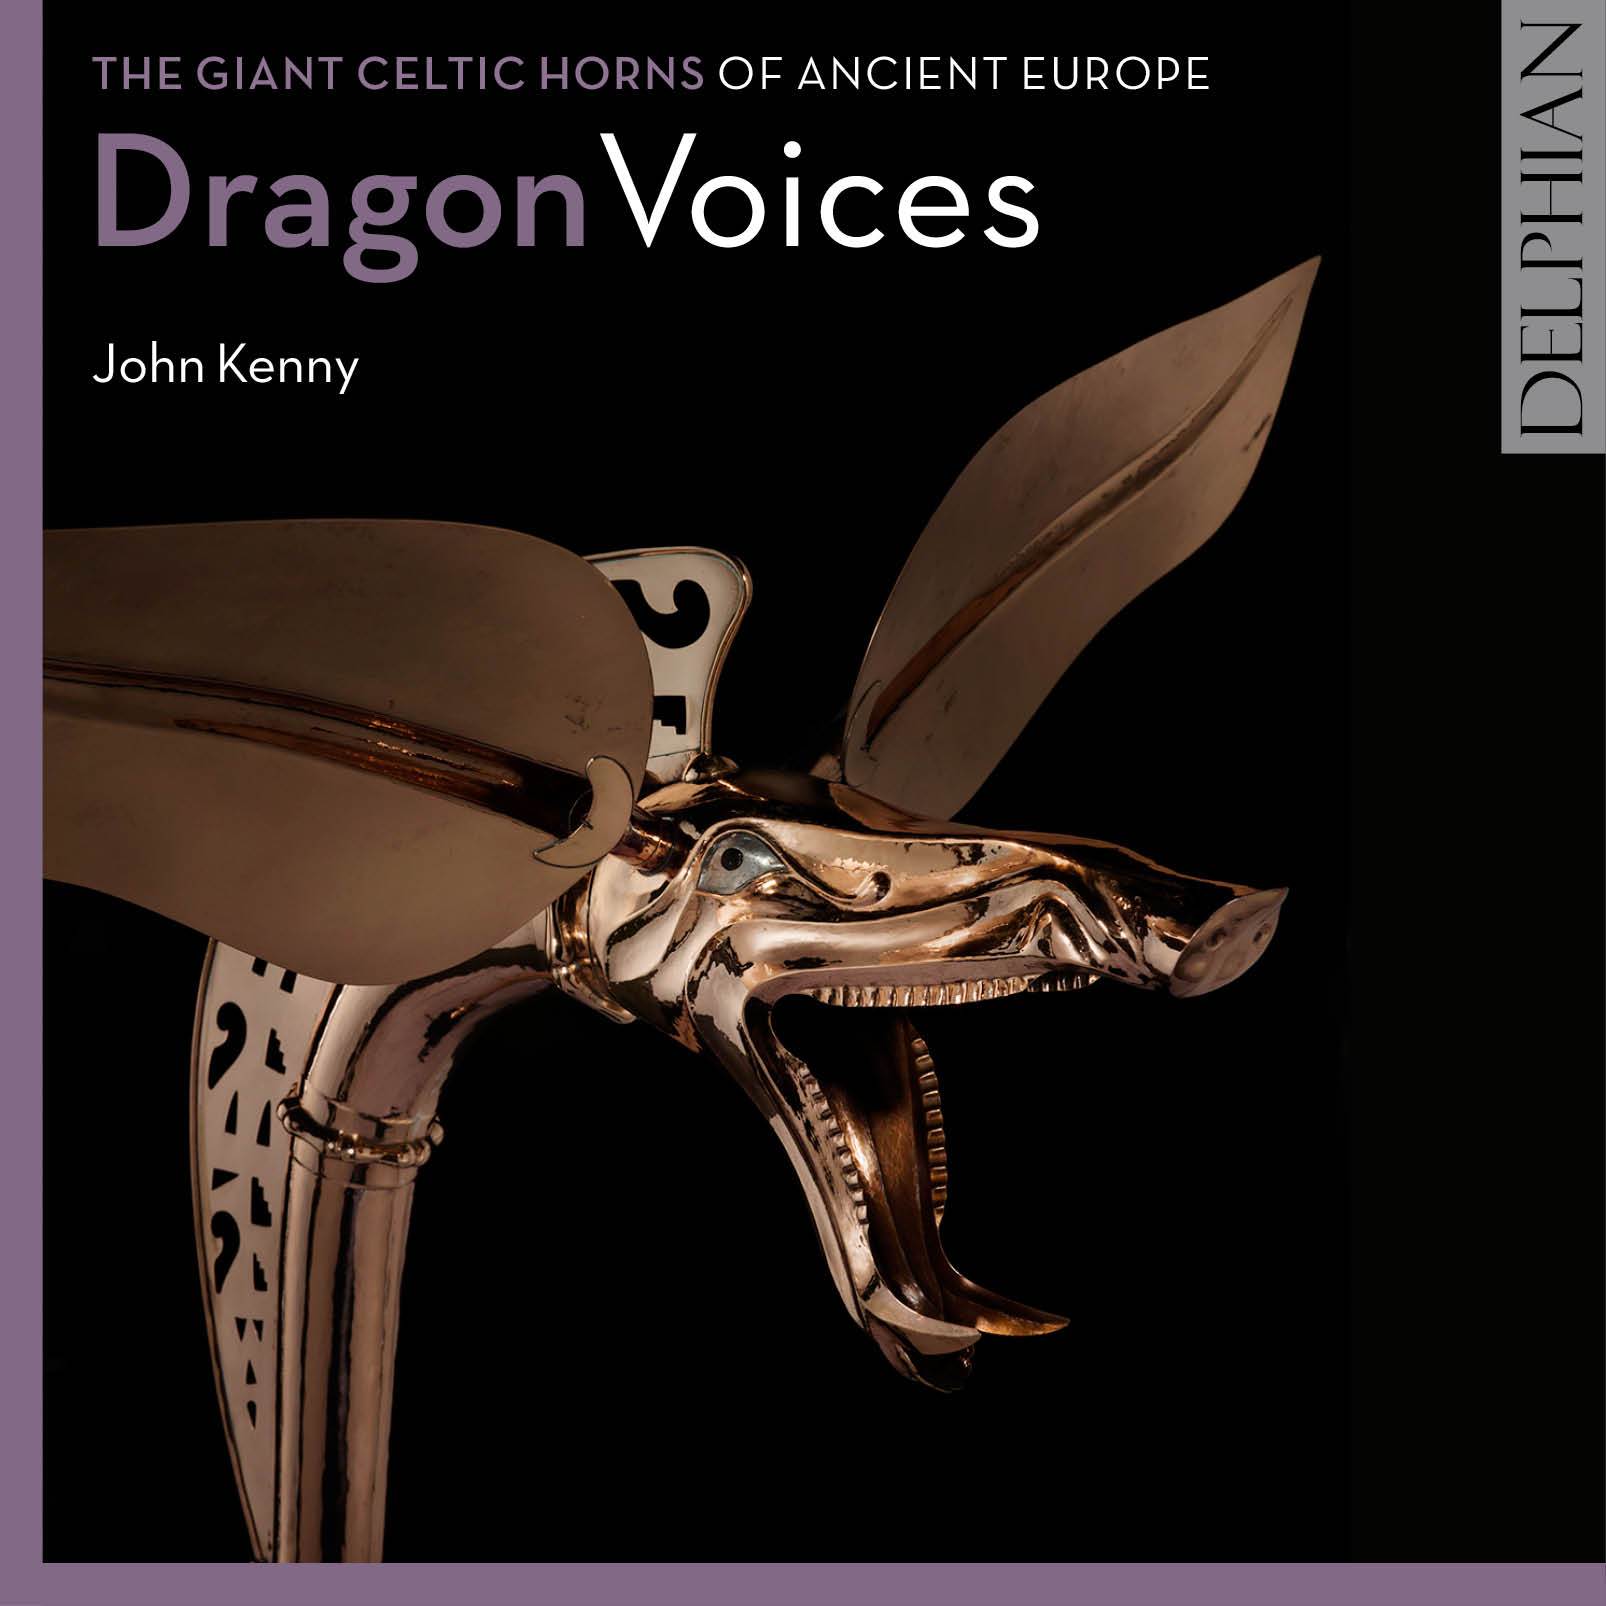 Dragon Voices: the giant Celtic horns of ancient Europe CD Delphian Records